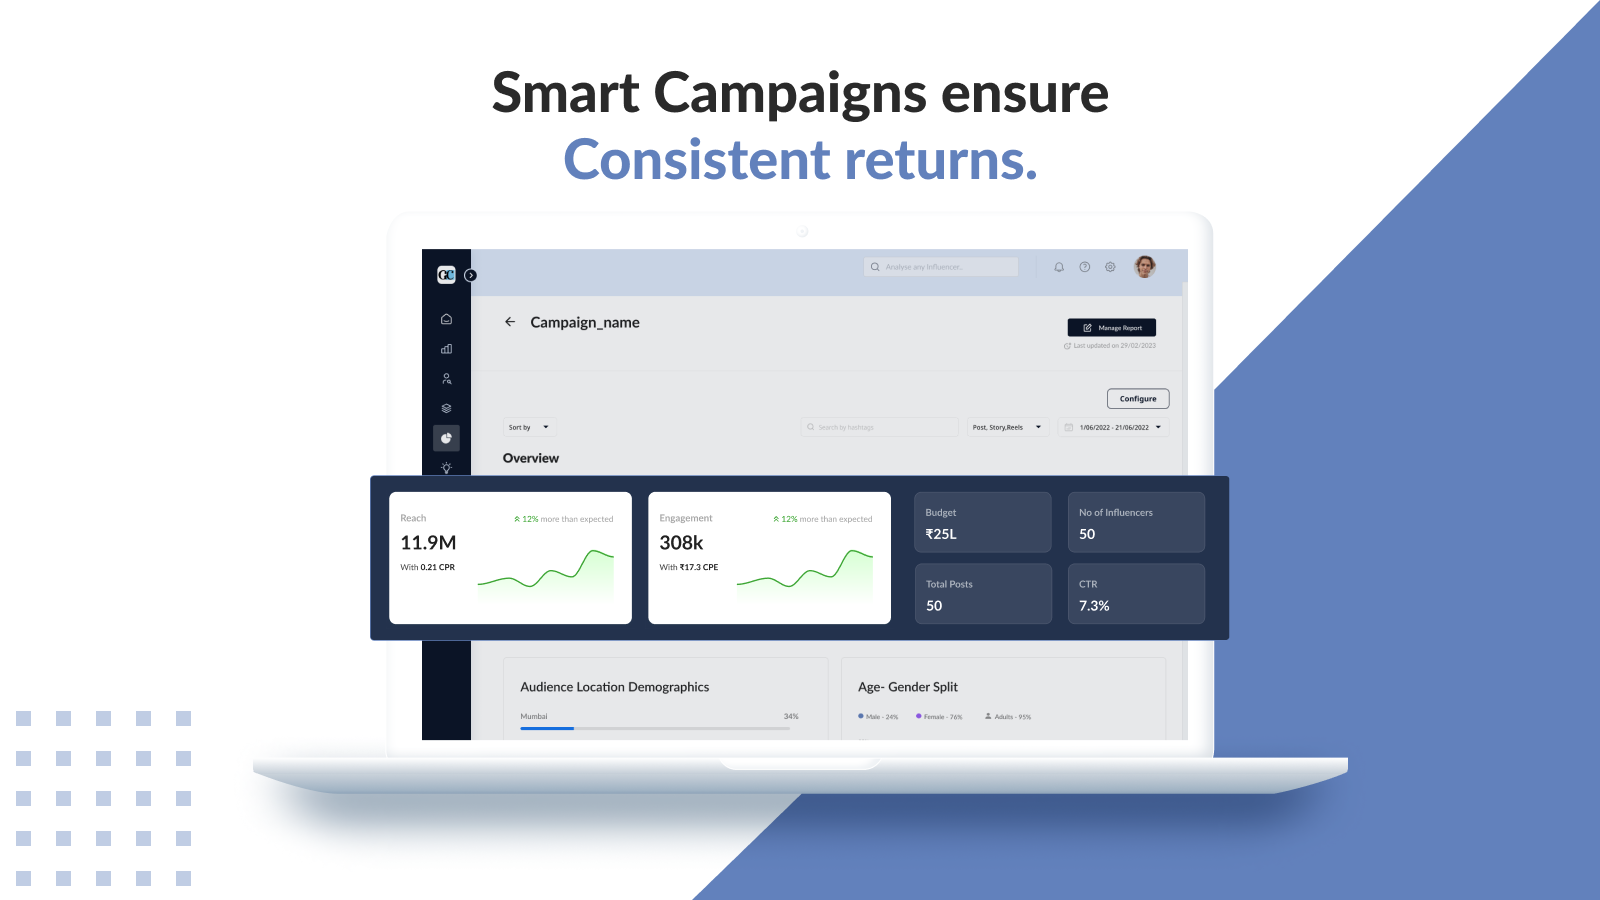 Smart Campaigns ensure consistent results